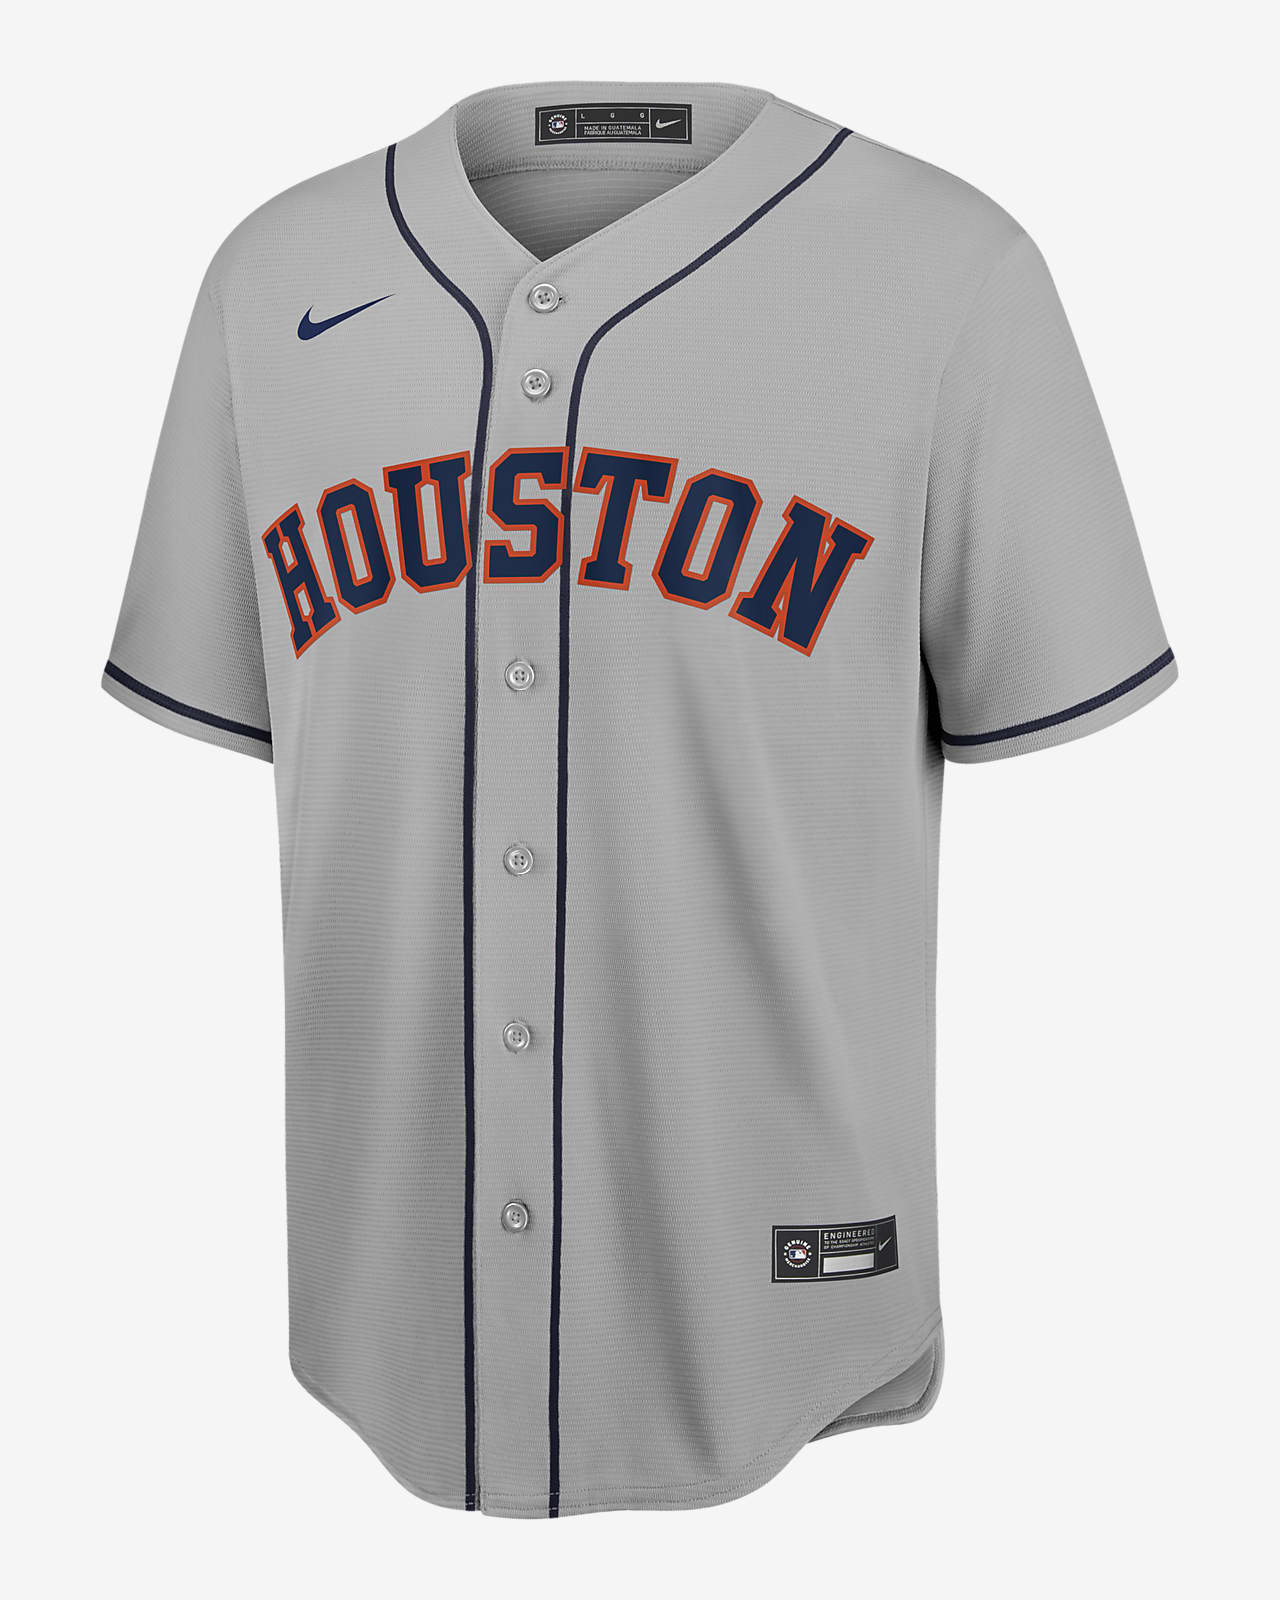 Camiseta de béisbol réplica para hombre MLB Houston Astros.